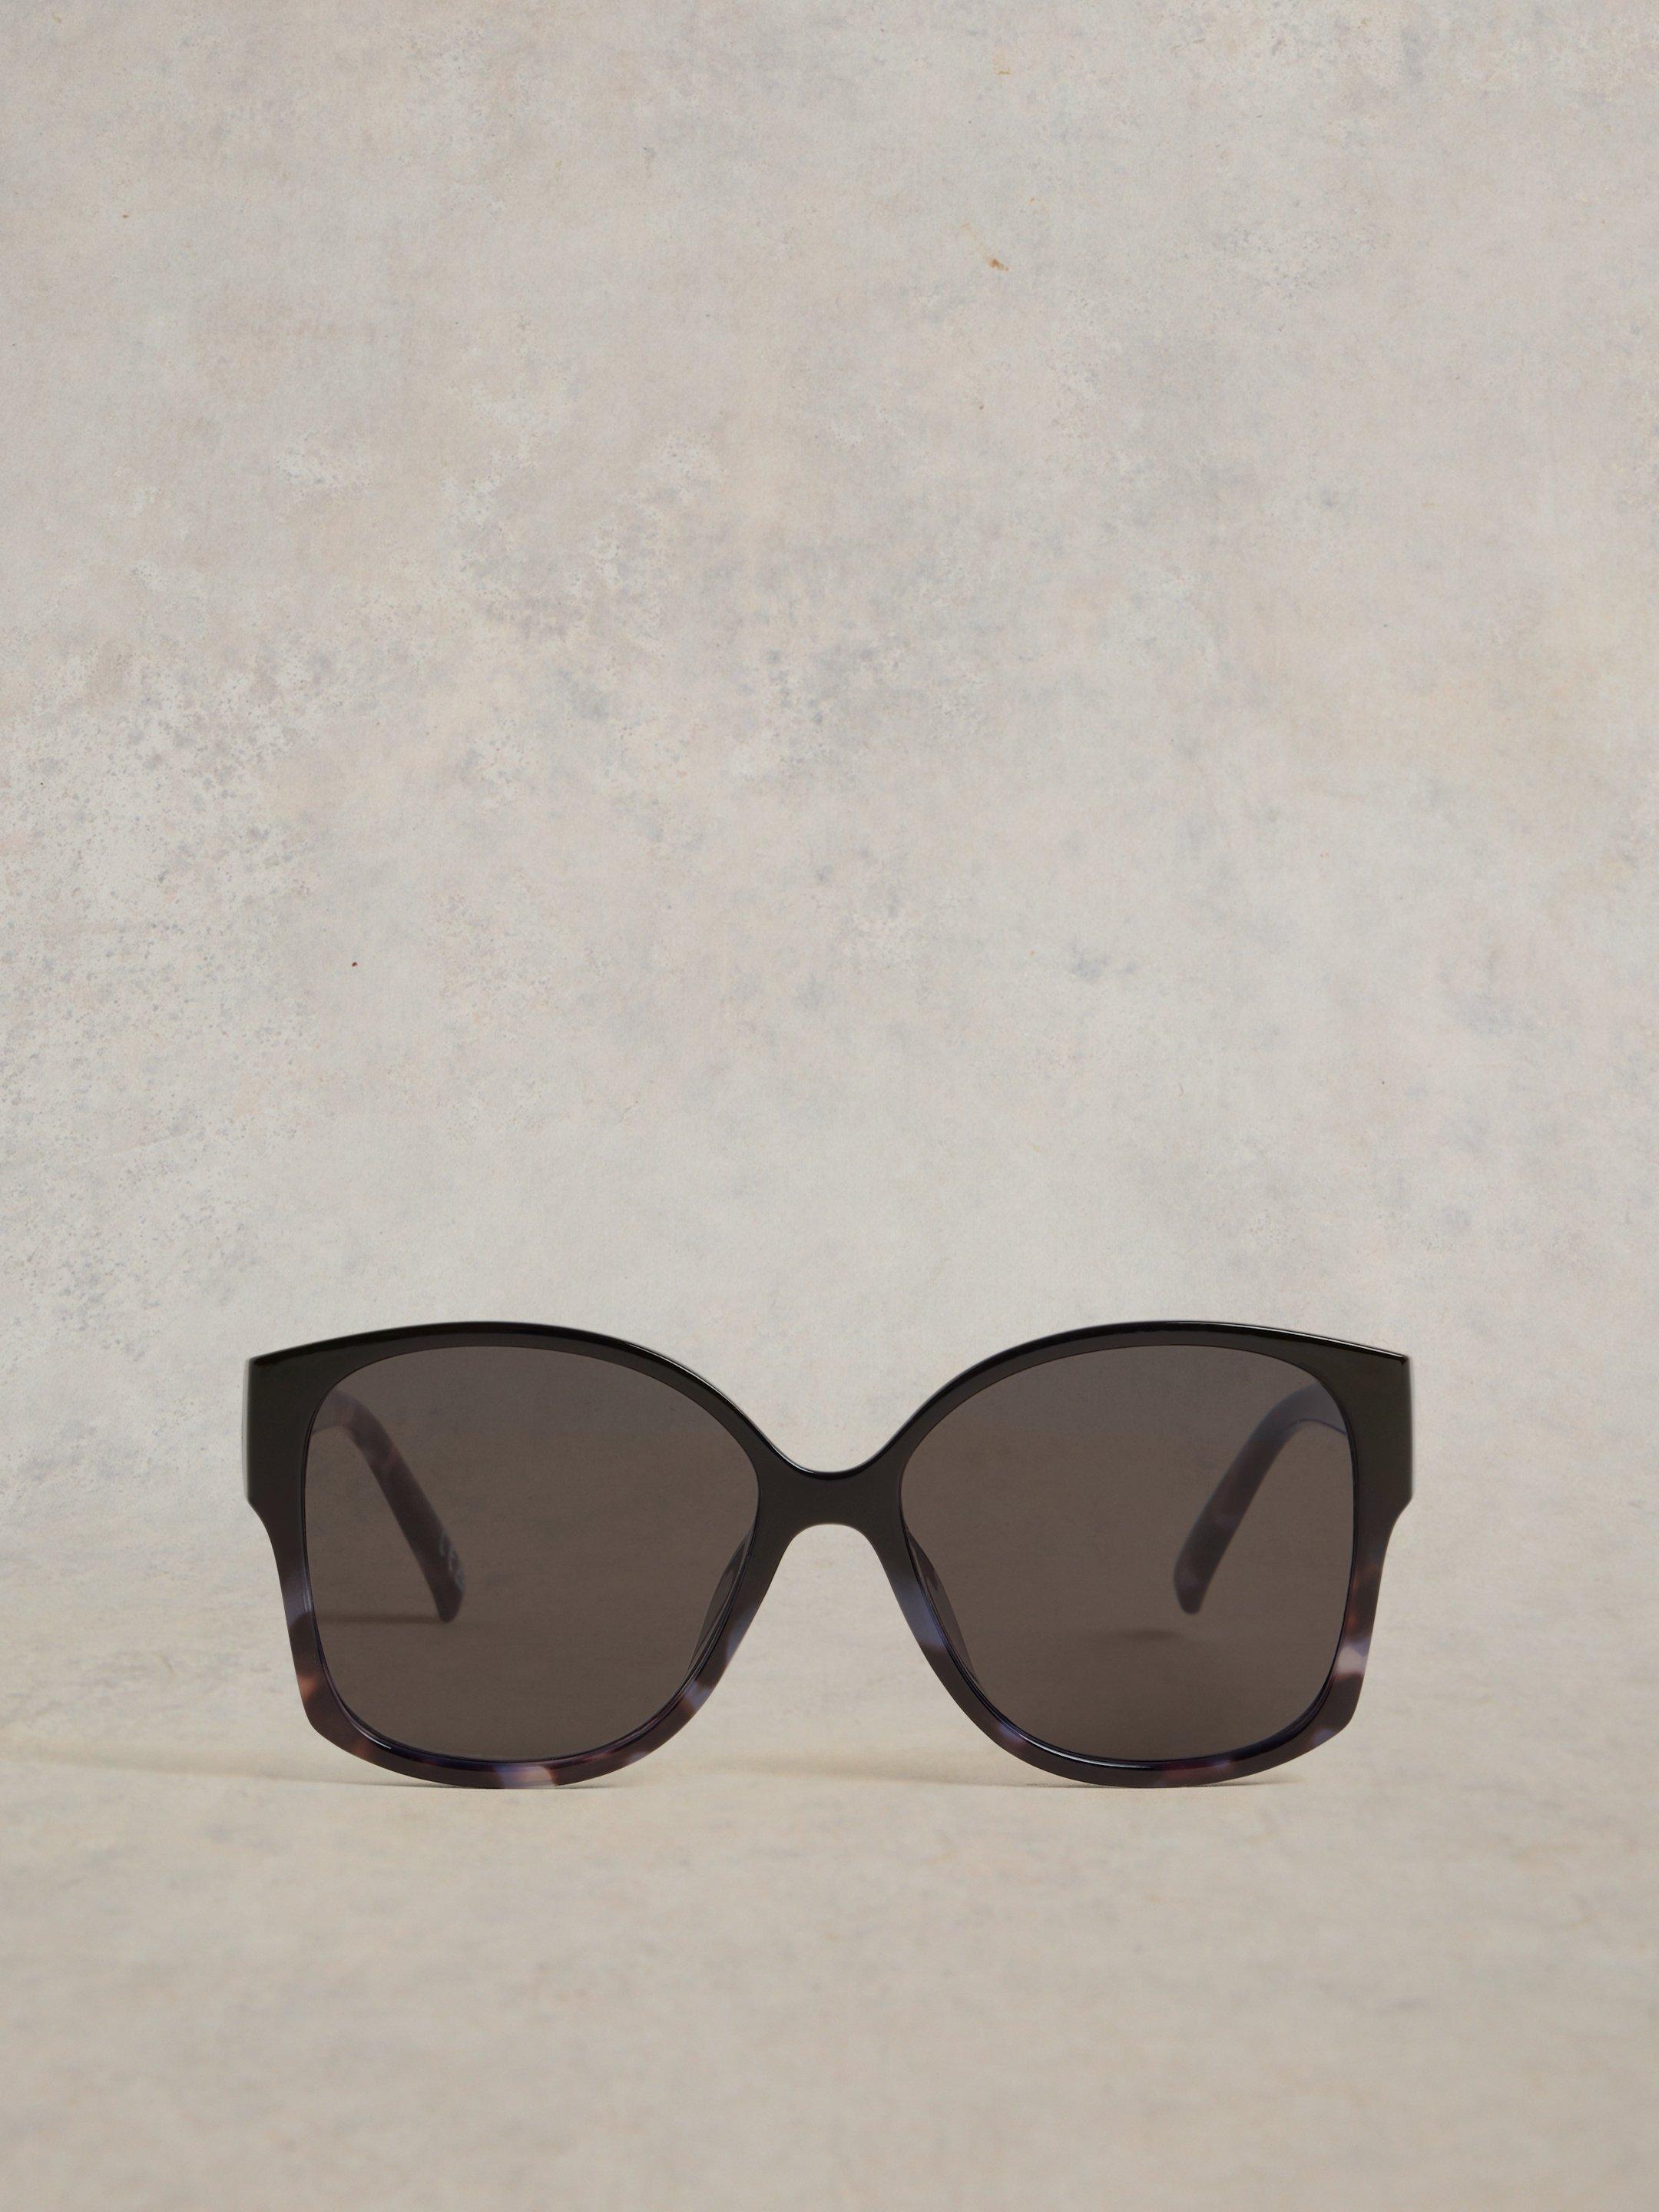 Dee Angled Cateye Sunglasses in BLK MLT - FLAT BACK